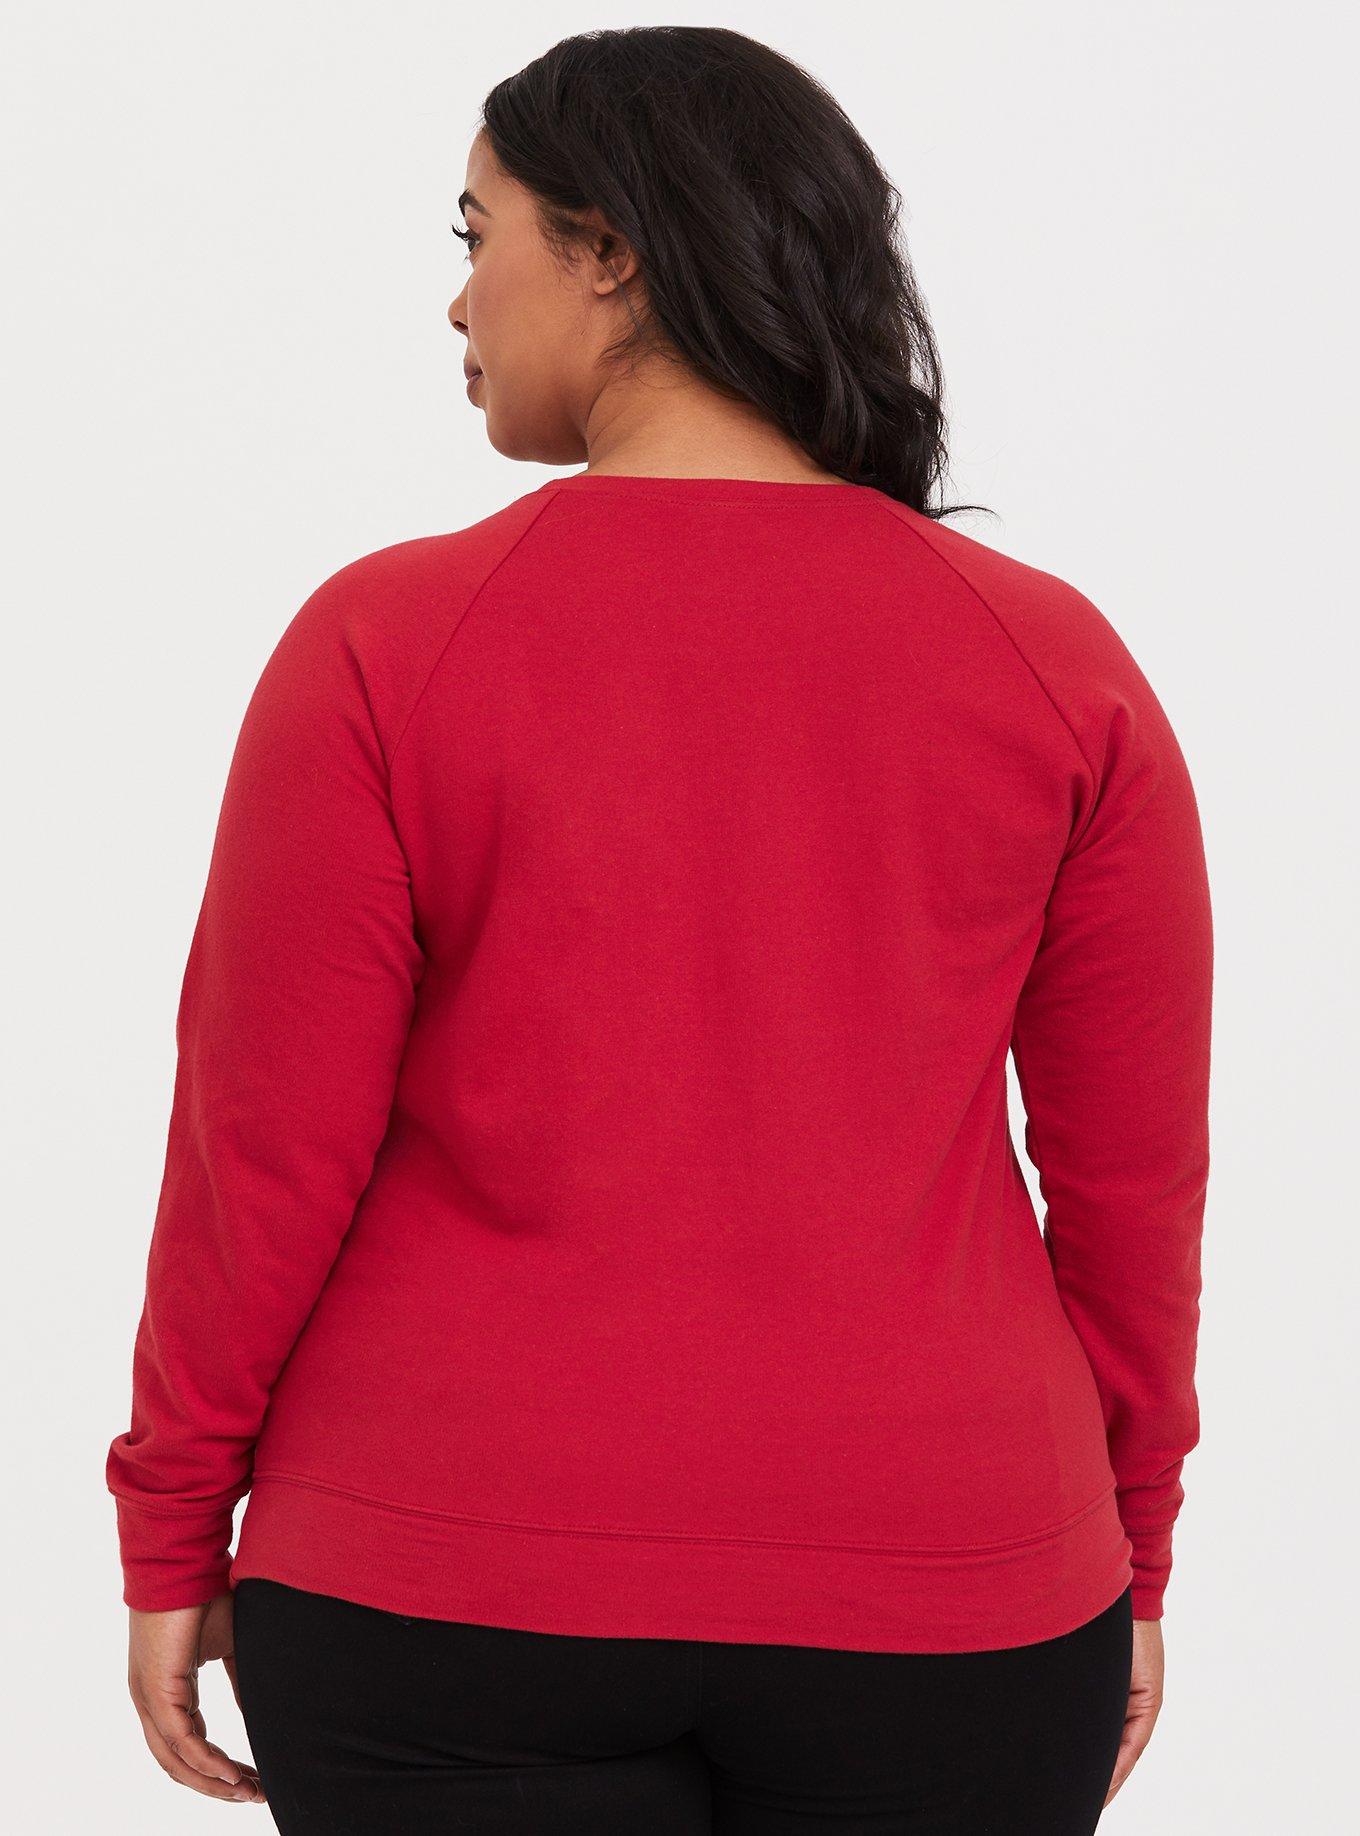 Plus Size - Red Naughty Sweatshirt - Torrid